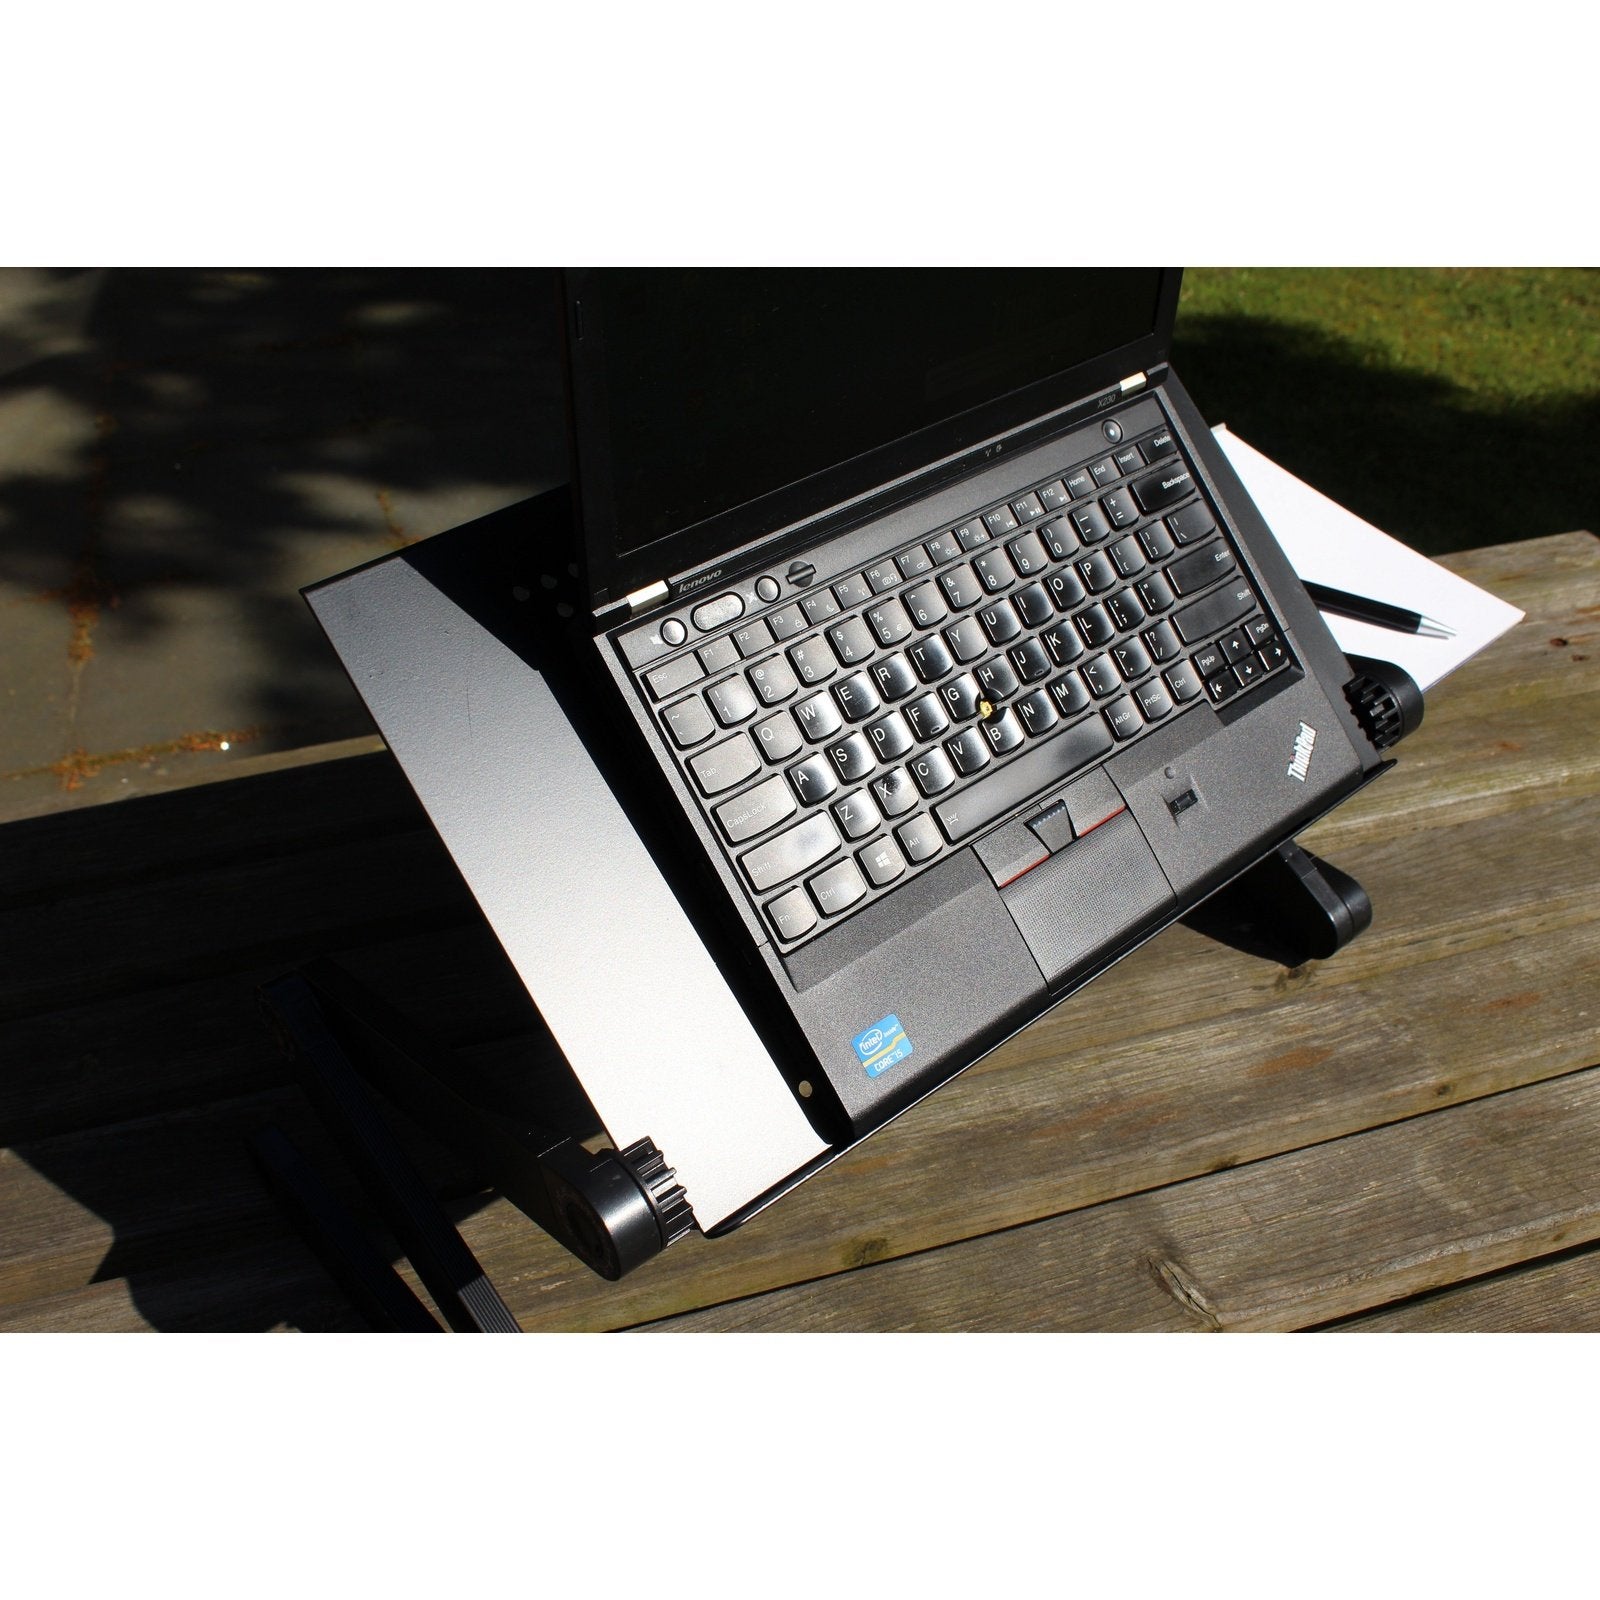 United Entertainment Multifunctionele Laptop Standaard - Zwart